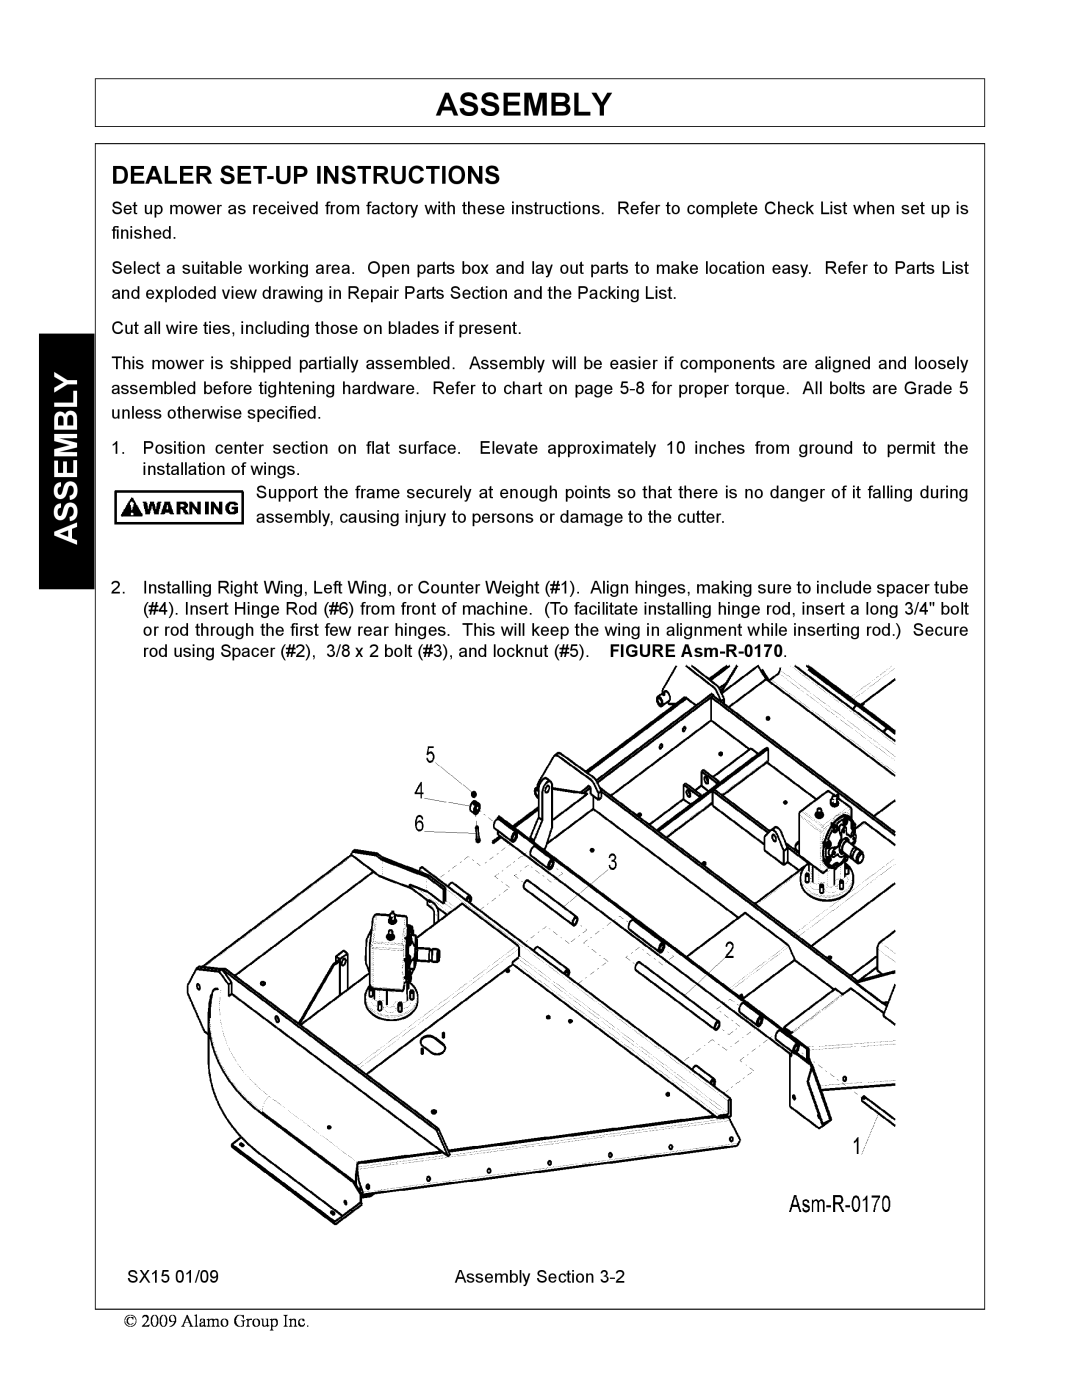 Alamo SX15 manual Assembly, Dealer Set-Up Instructions 